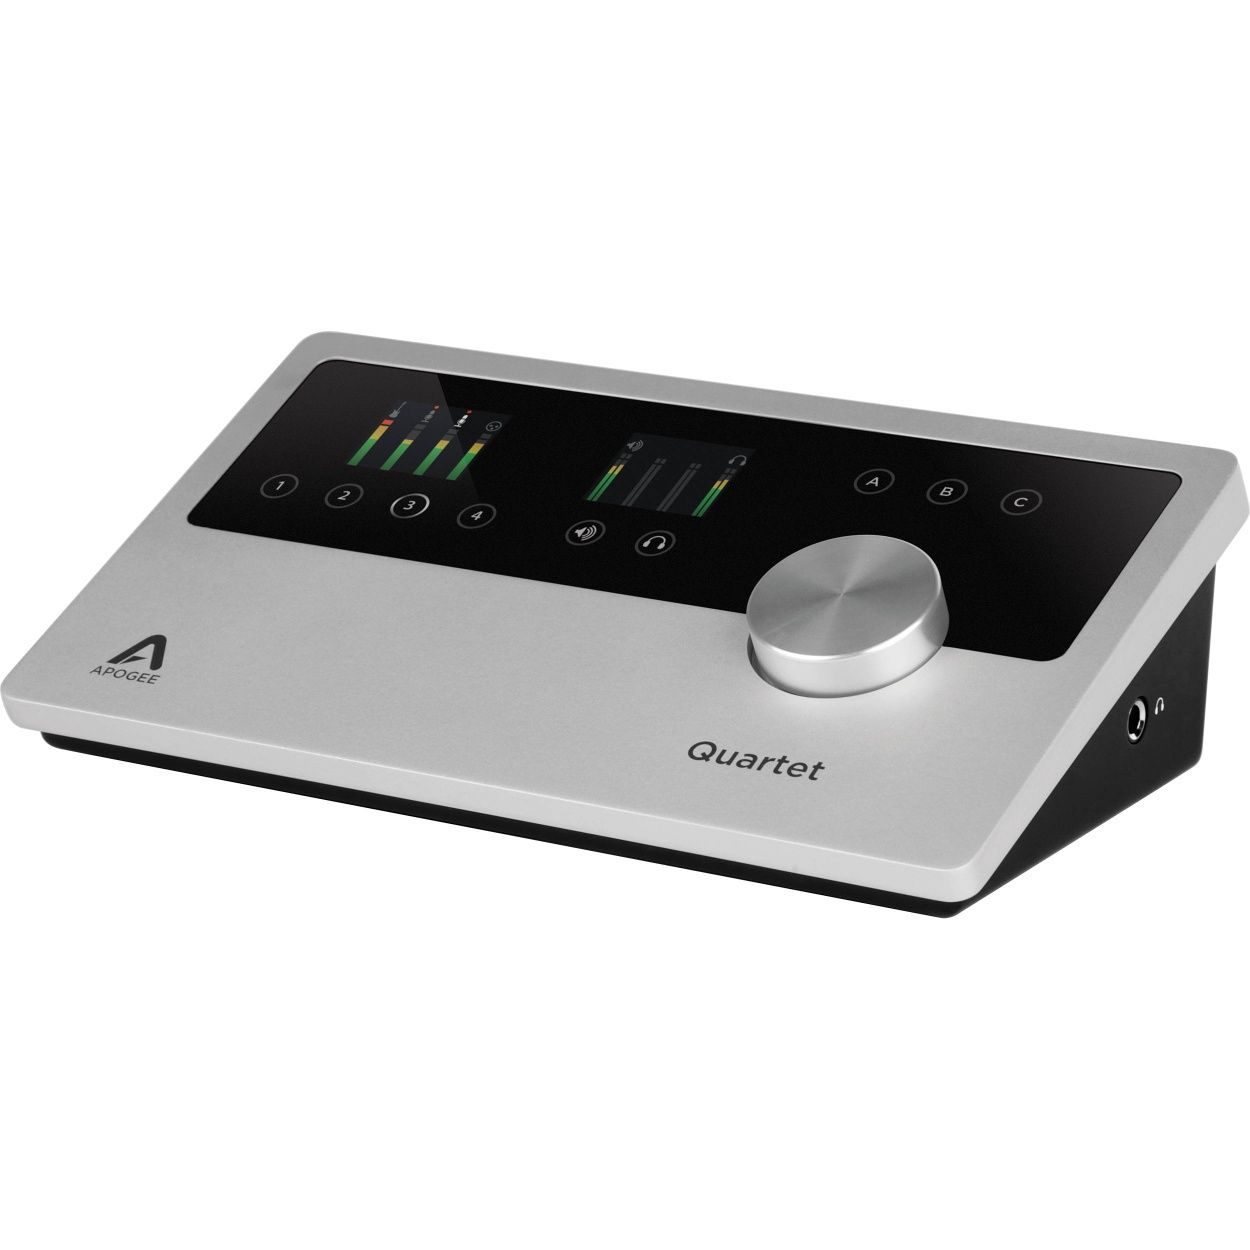 Apogee Quartet - USB Audio Interface.